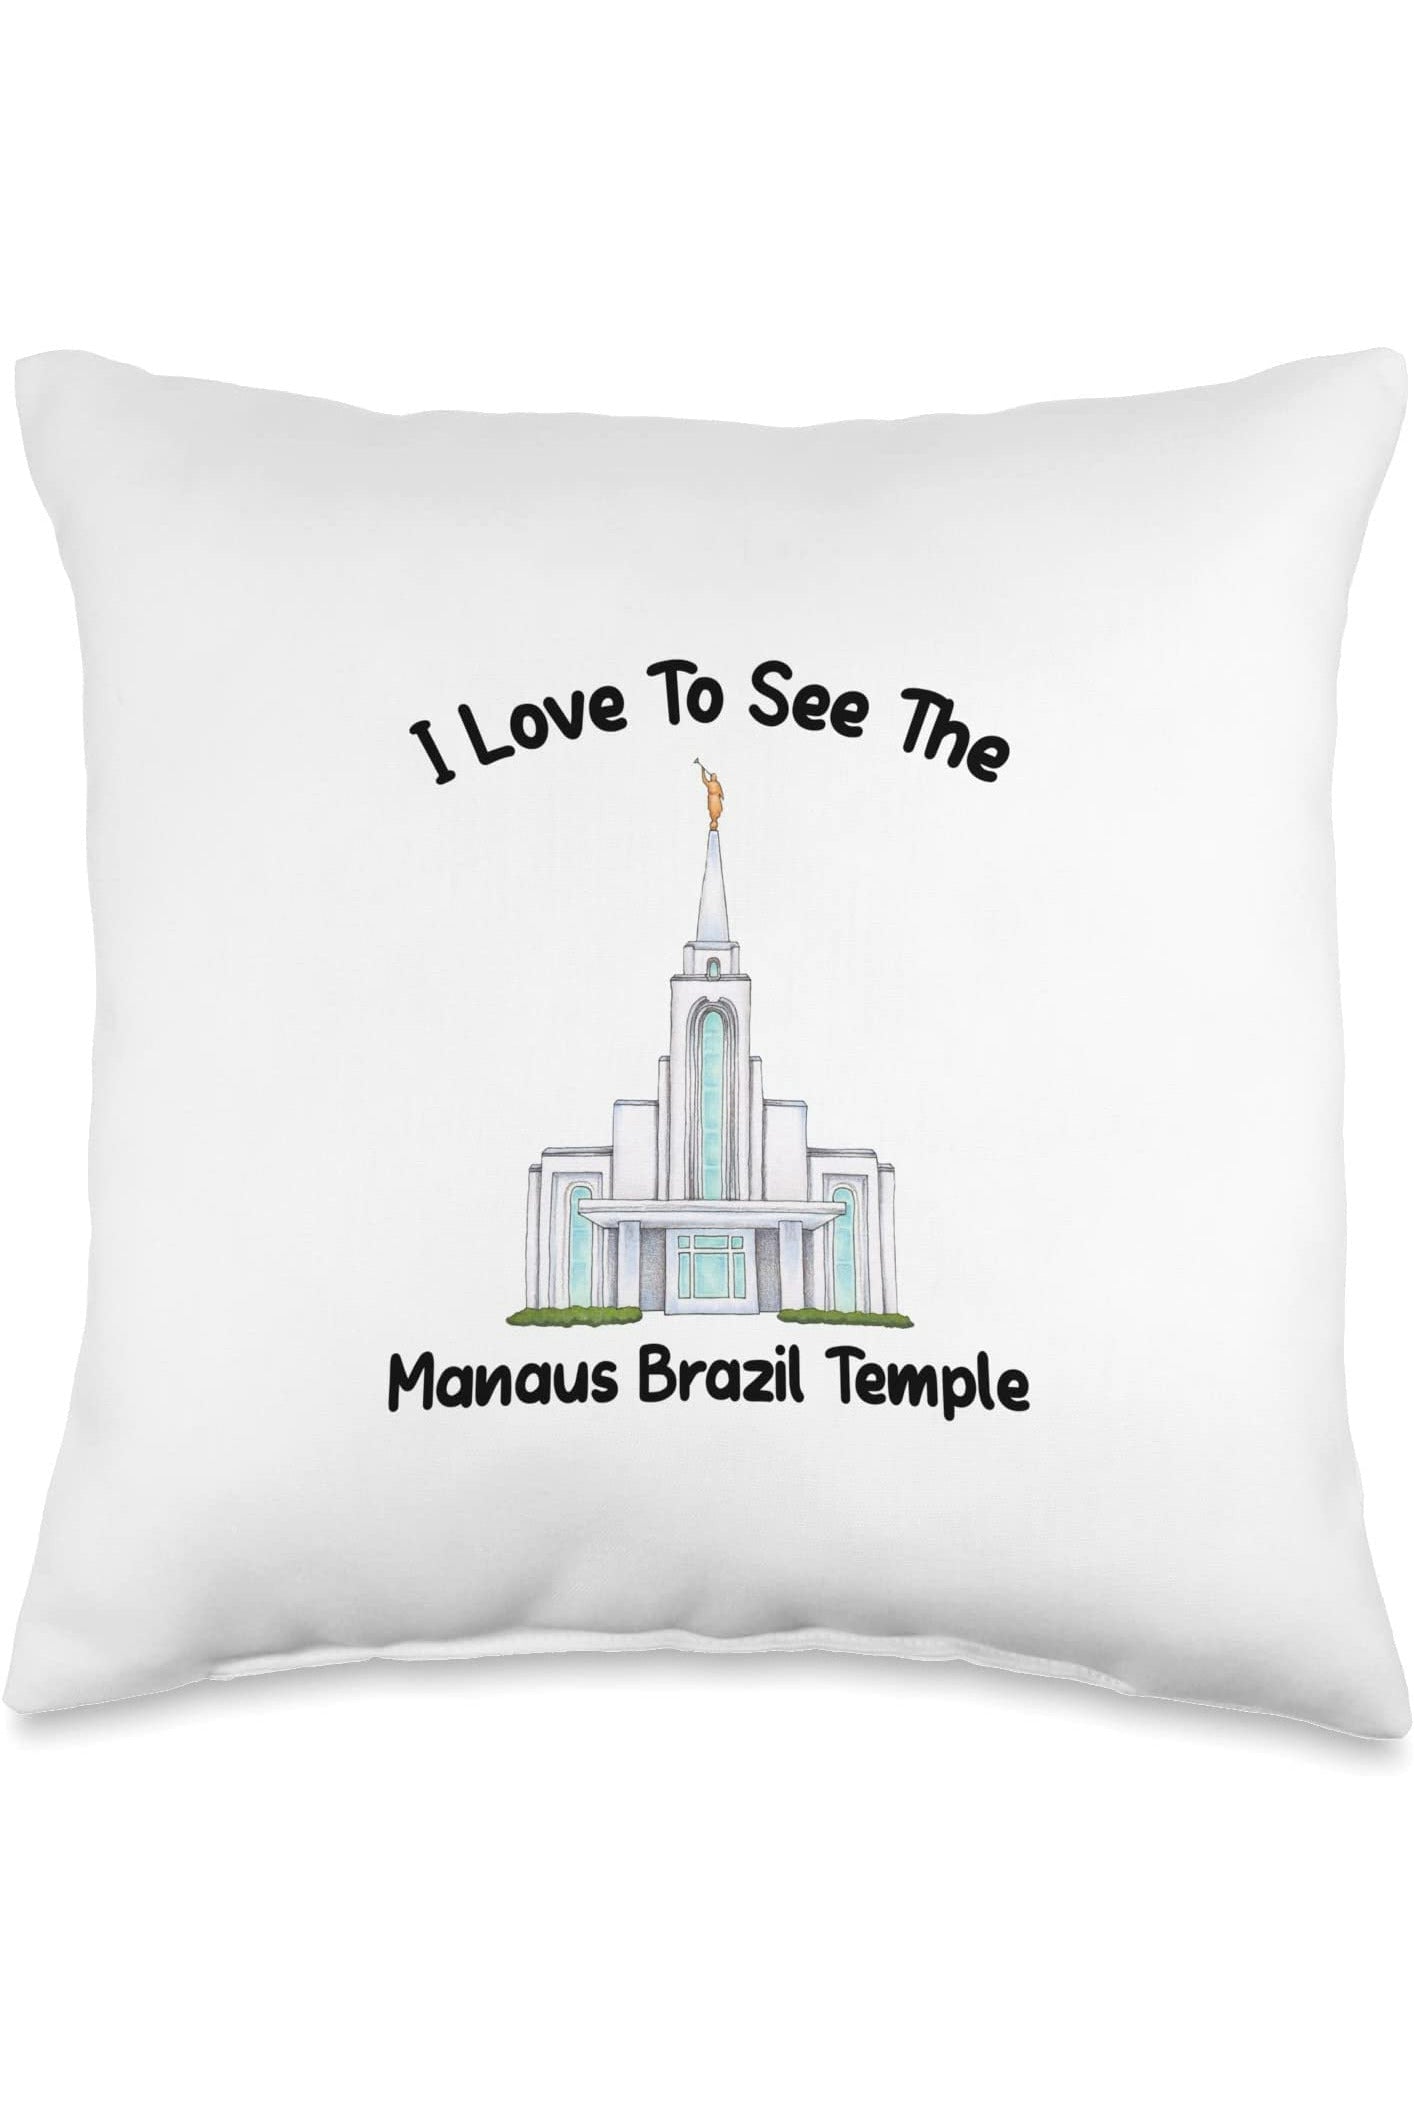 Manaus Brazil Temple Throw Pillows - Primary Style (English) US